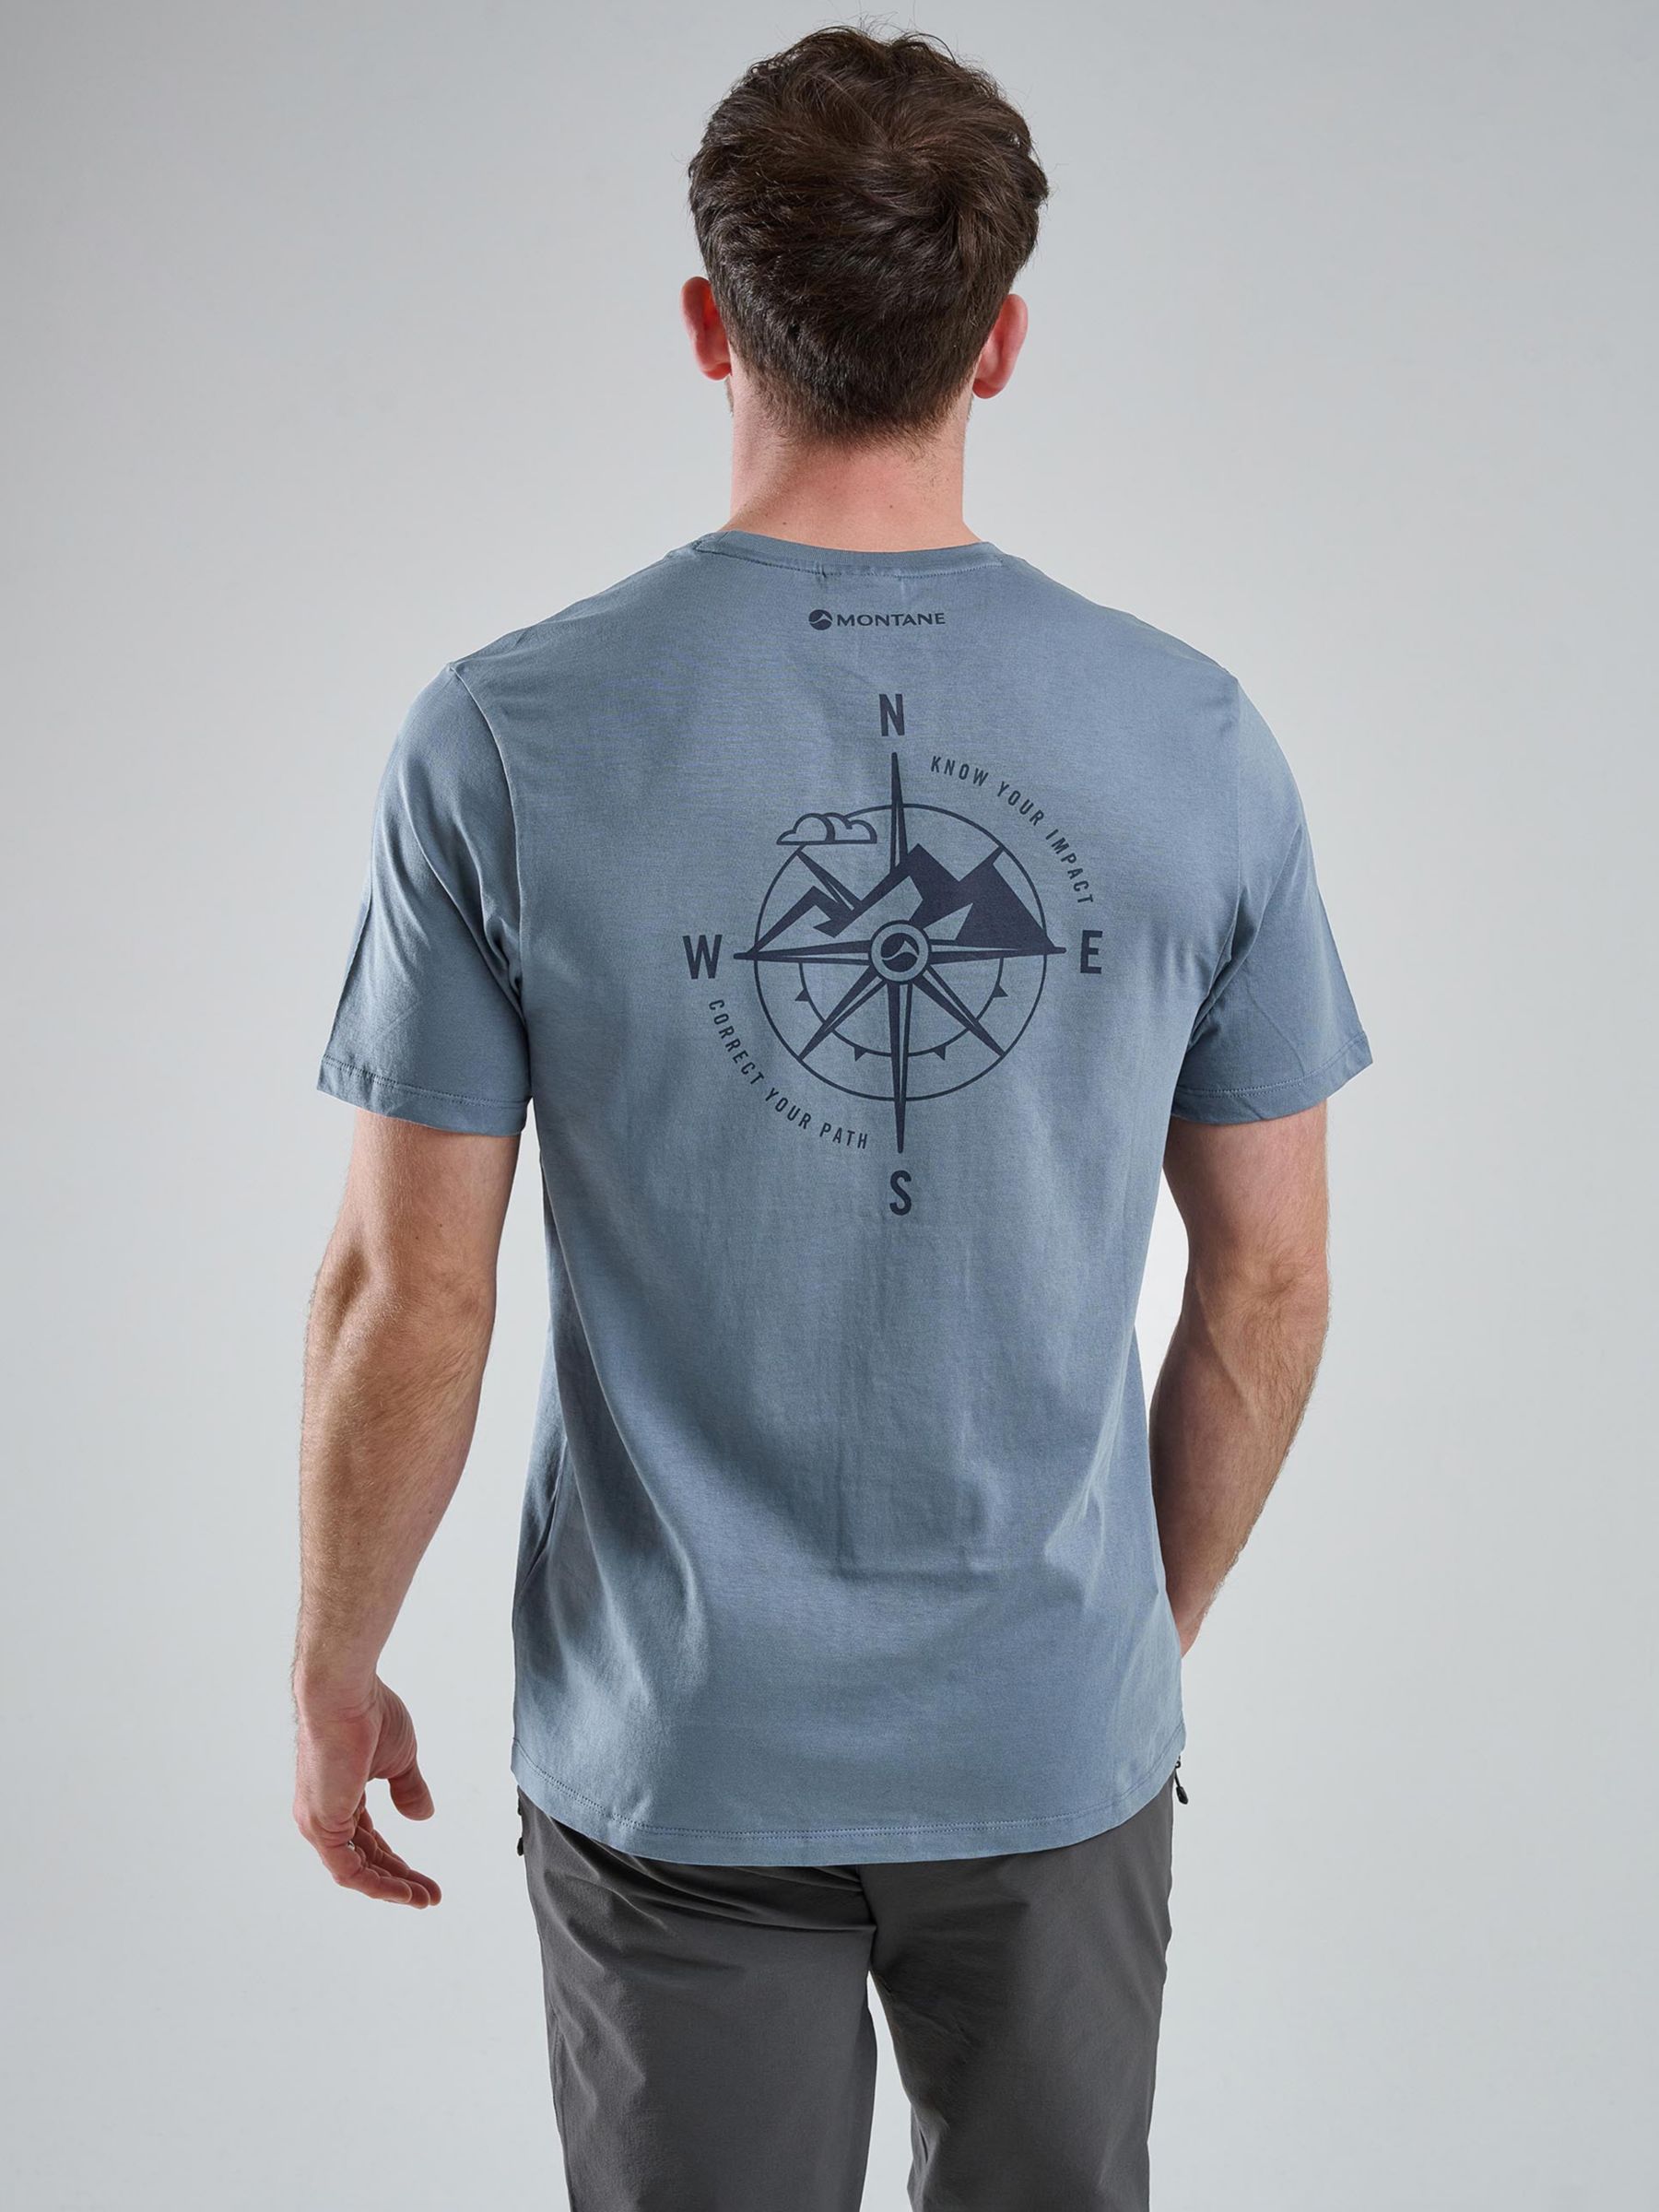 Montane Impact Compass T-Shirt, Stone Blue, XS